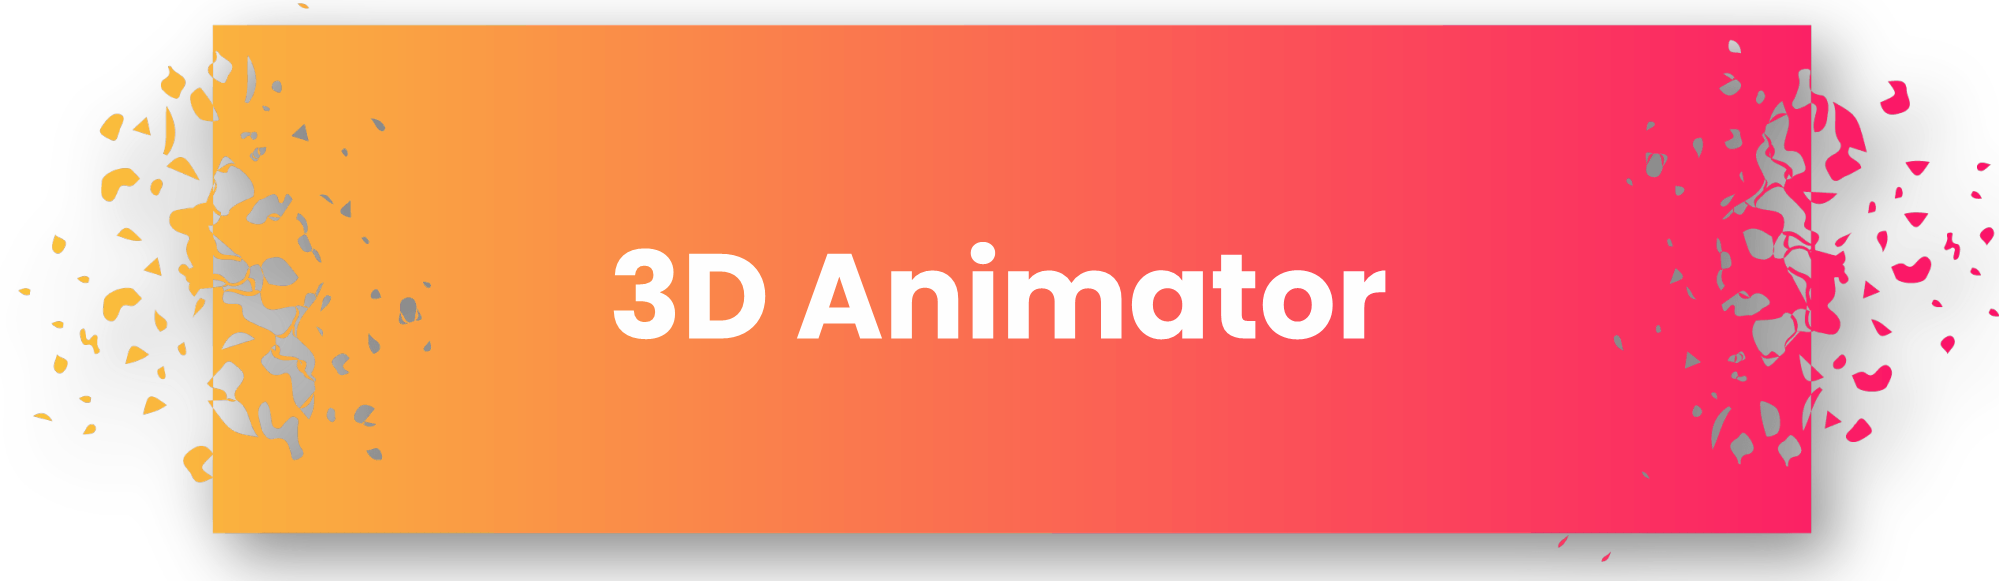 3D Animator